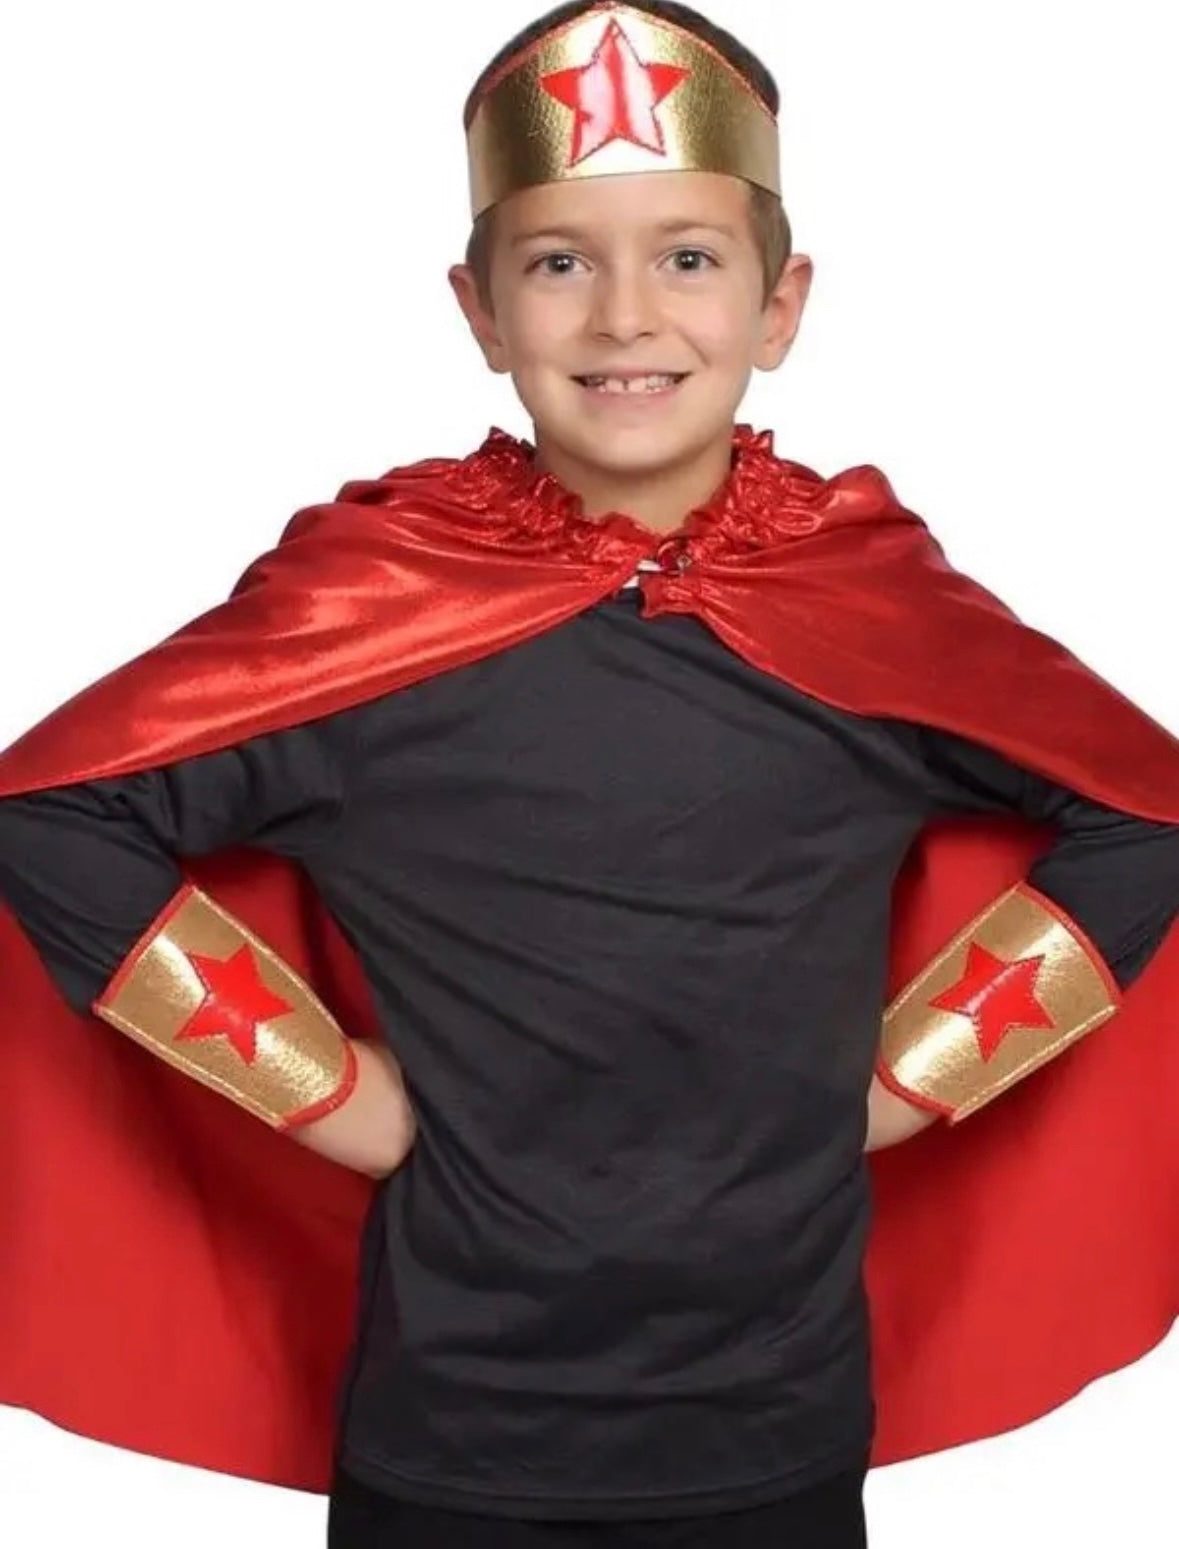 Red Super Hero Cape for Adventures, Boys & Girls - Alder & Alouette